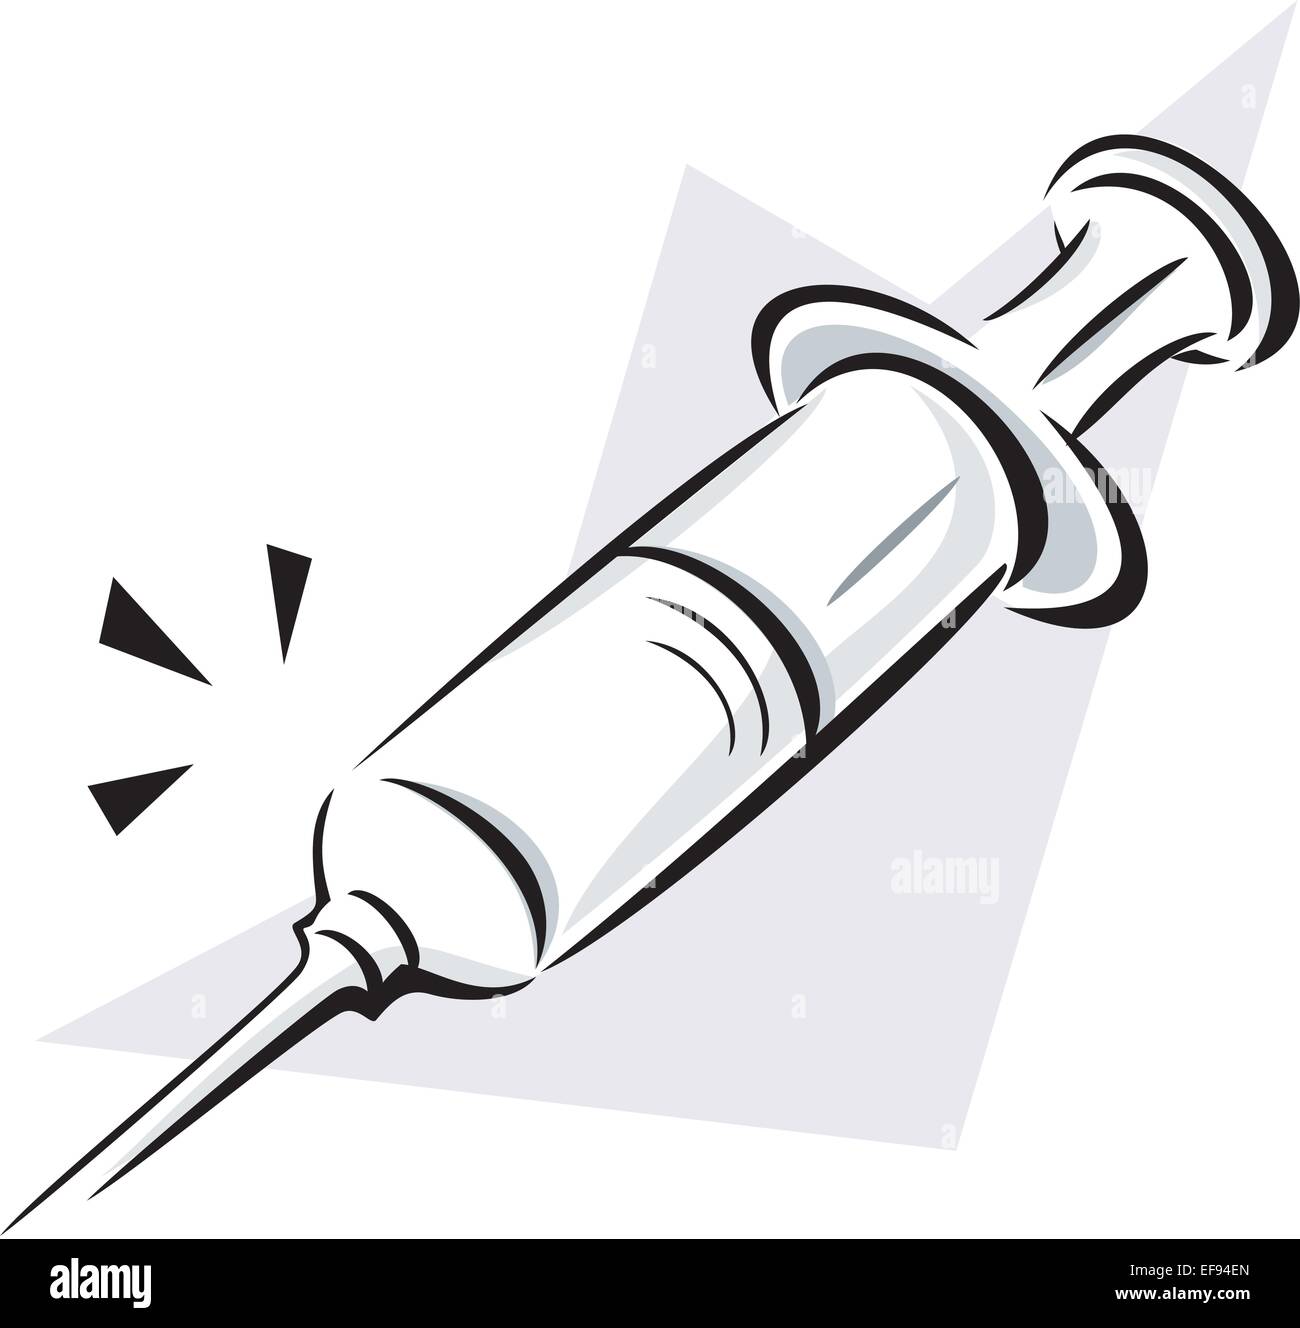 Syringe and Needle Stock Vector